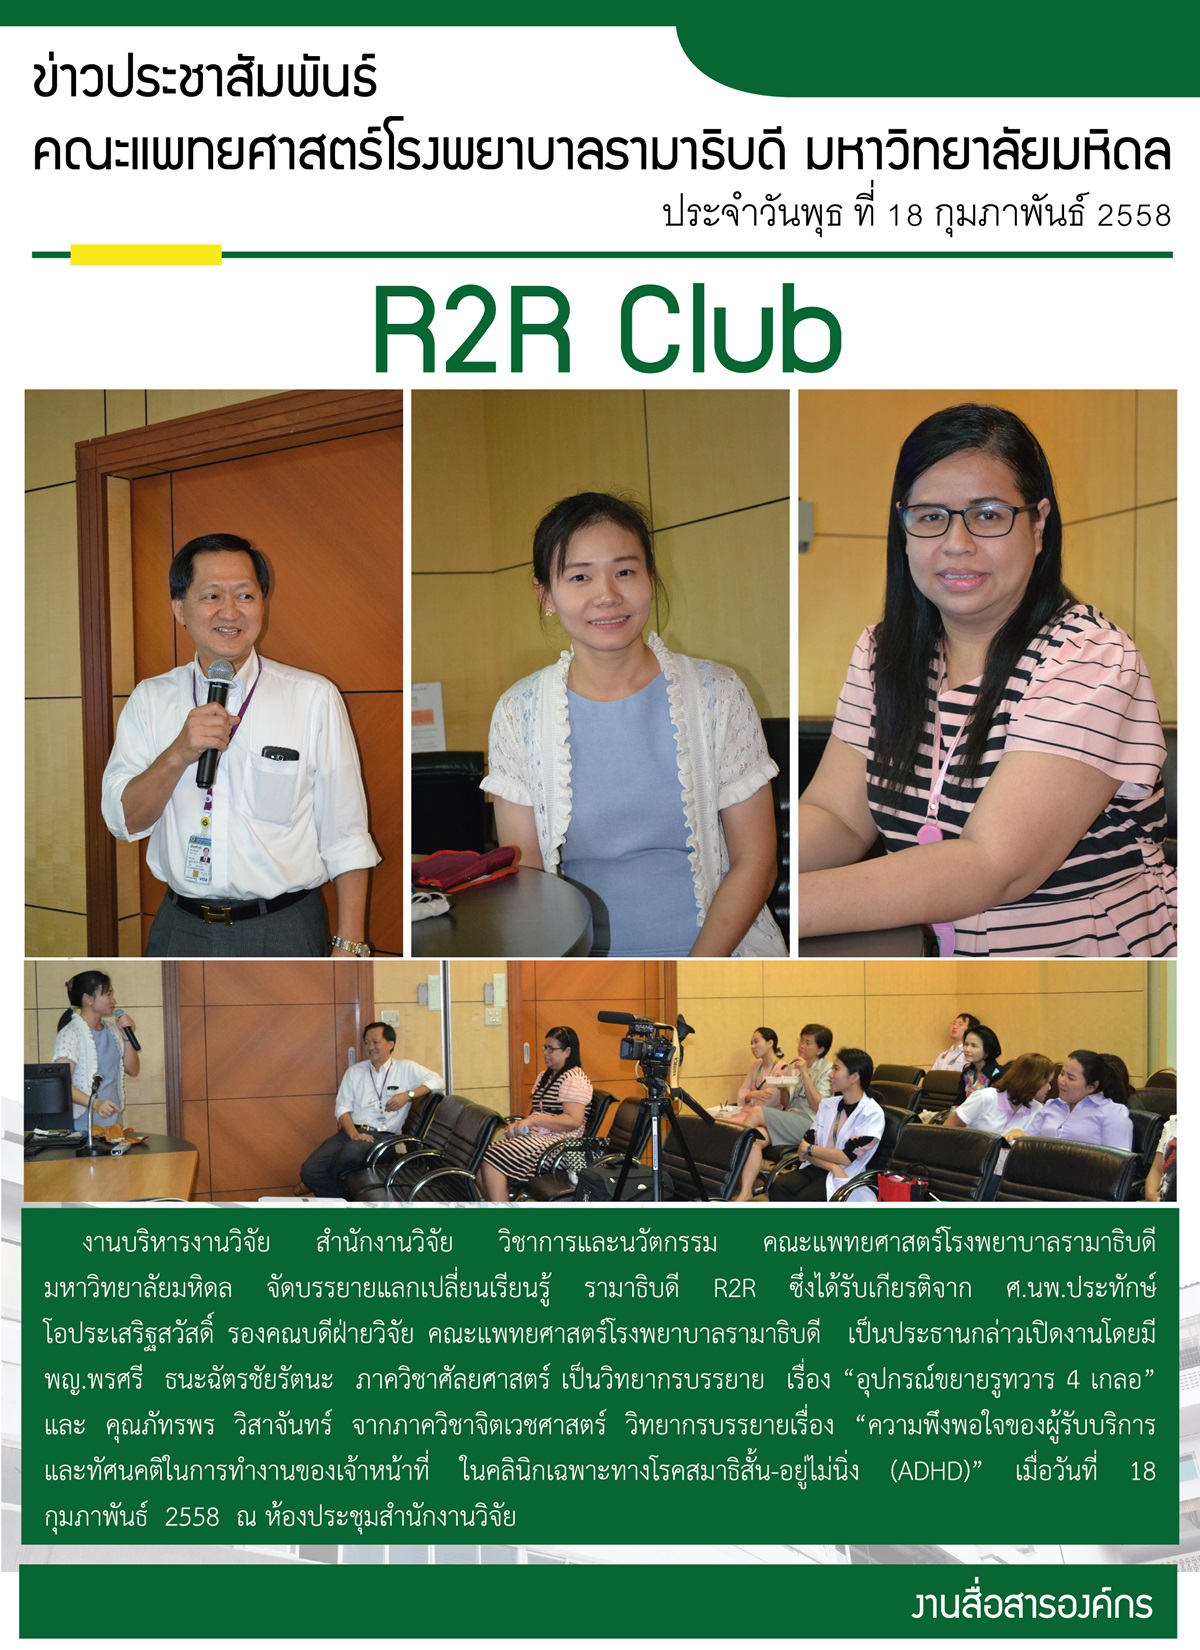 R2R Club